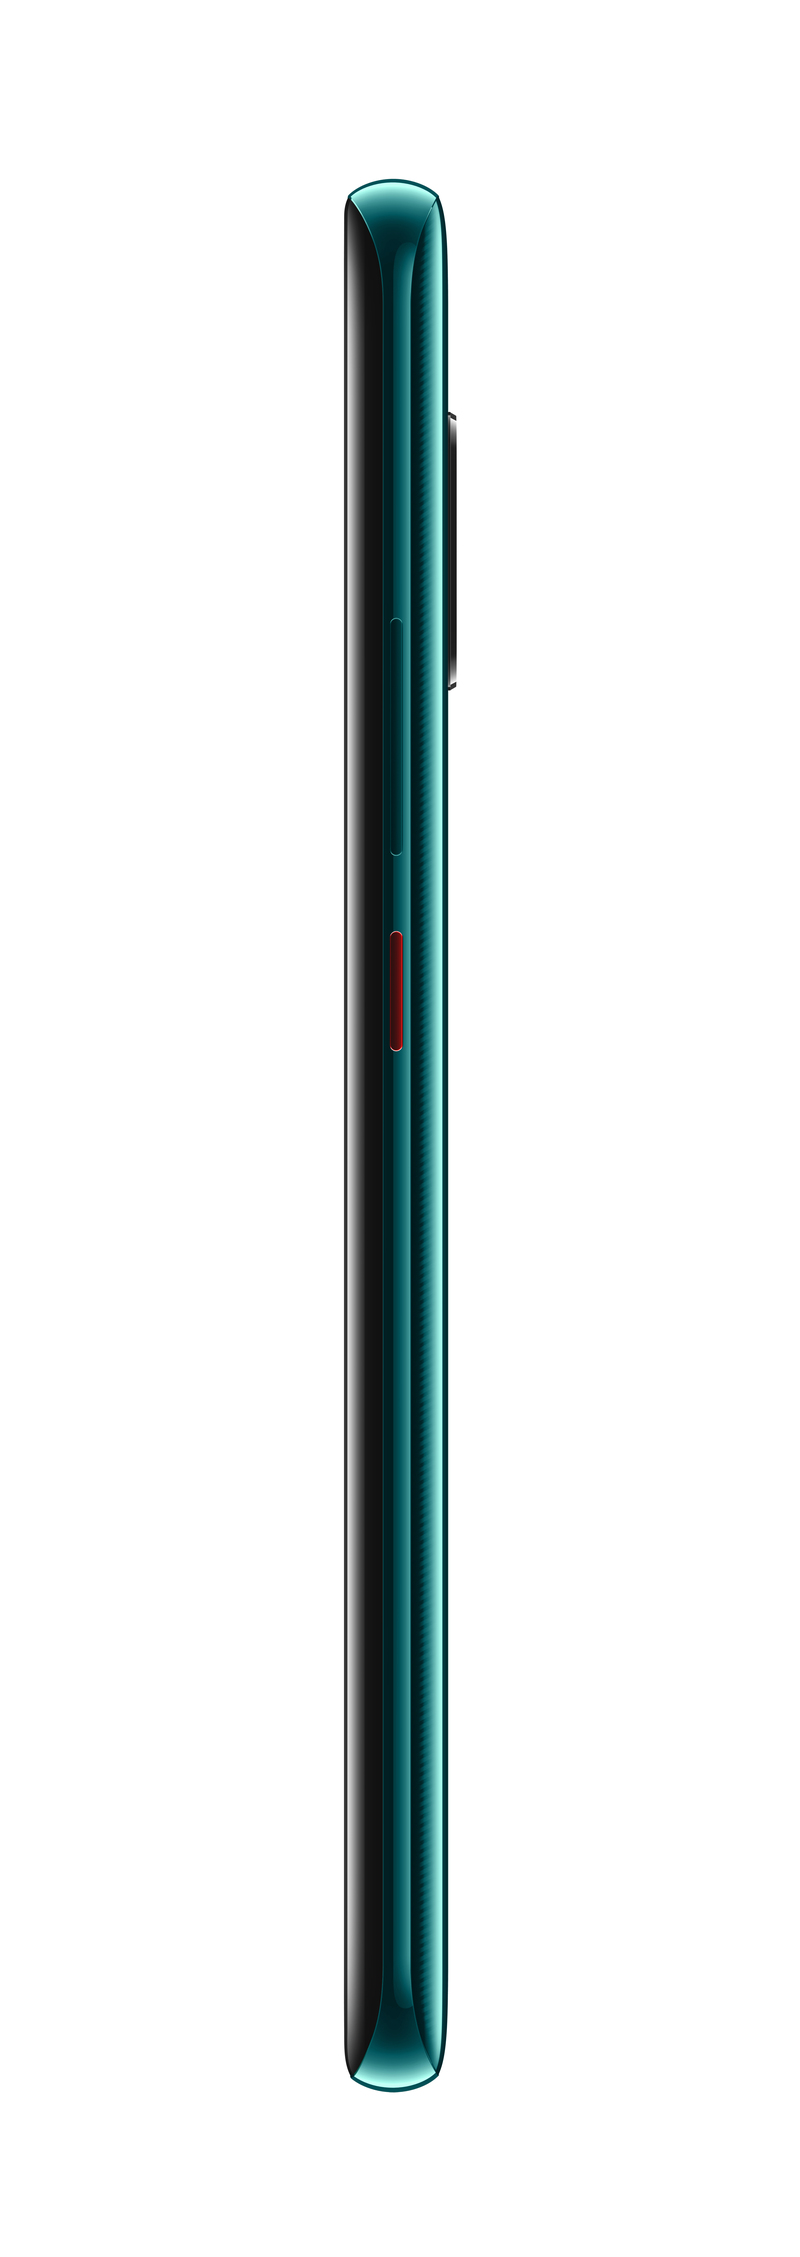 Huawei Mate 20 Pro Smartphone 128GB Dual SIM 4G Emerald Green